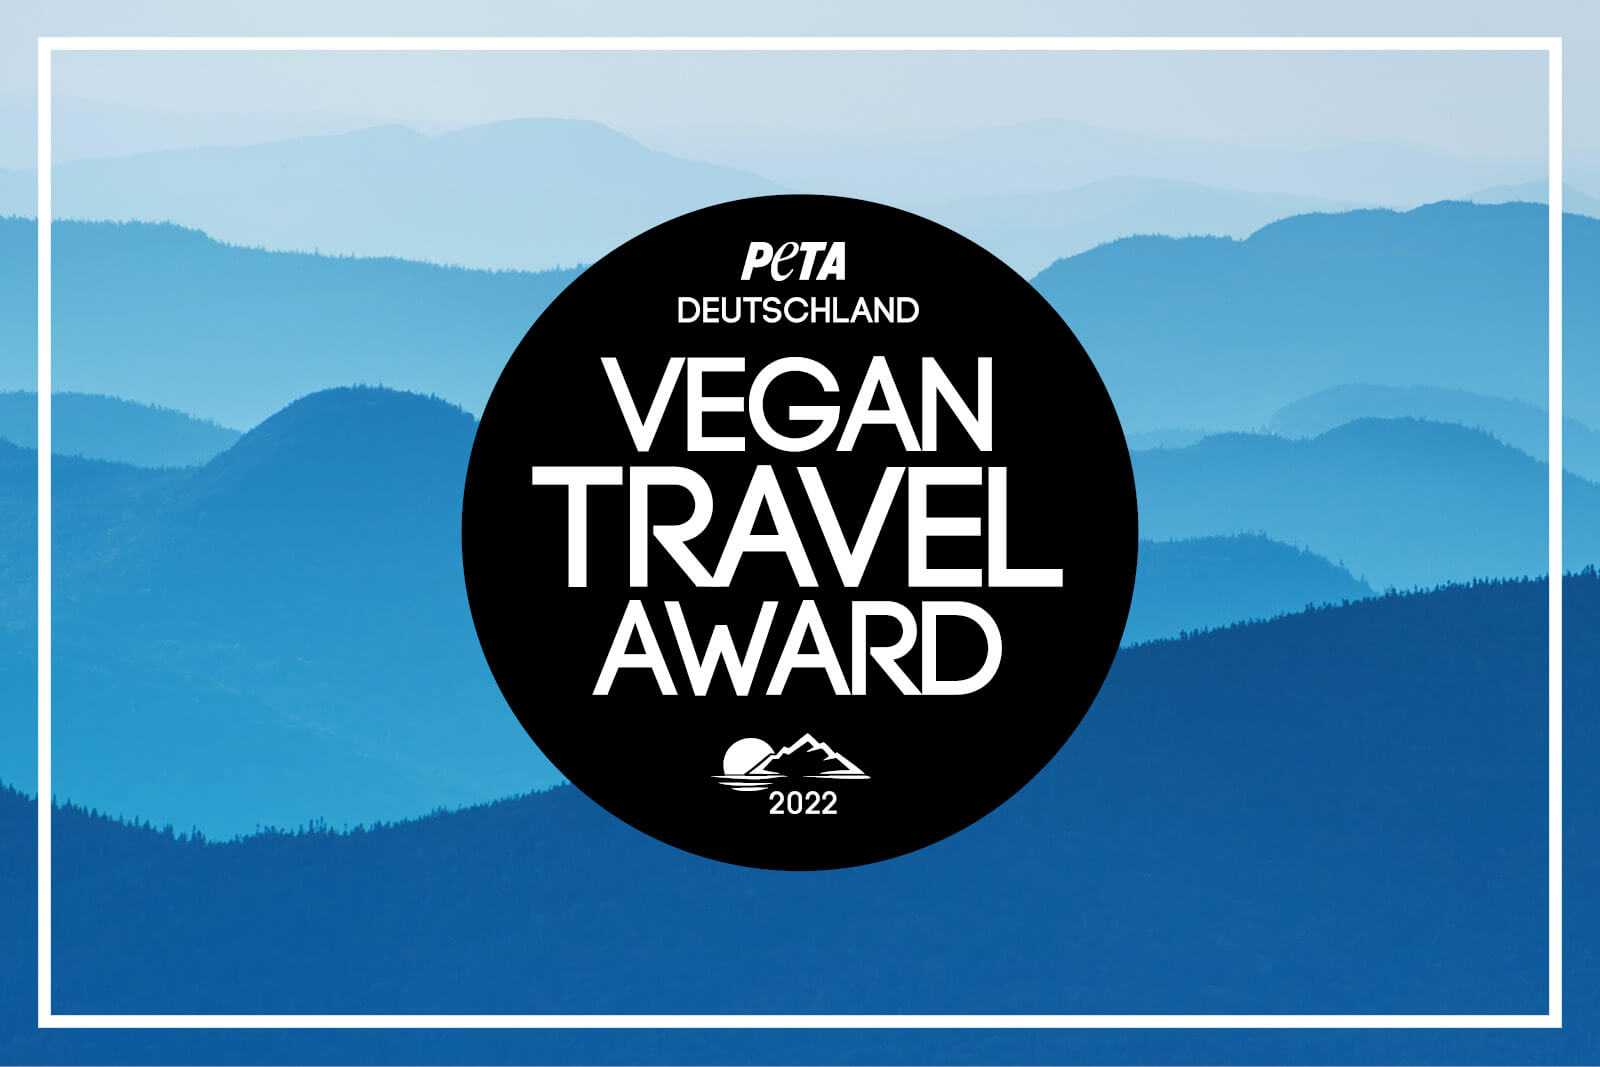 PETAs Vegan Travel Award 2022 – jetzt bewerben!